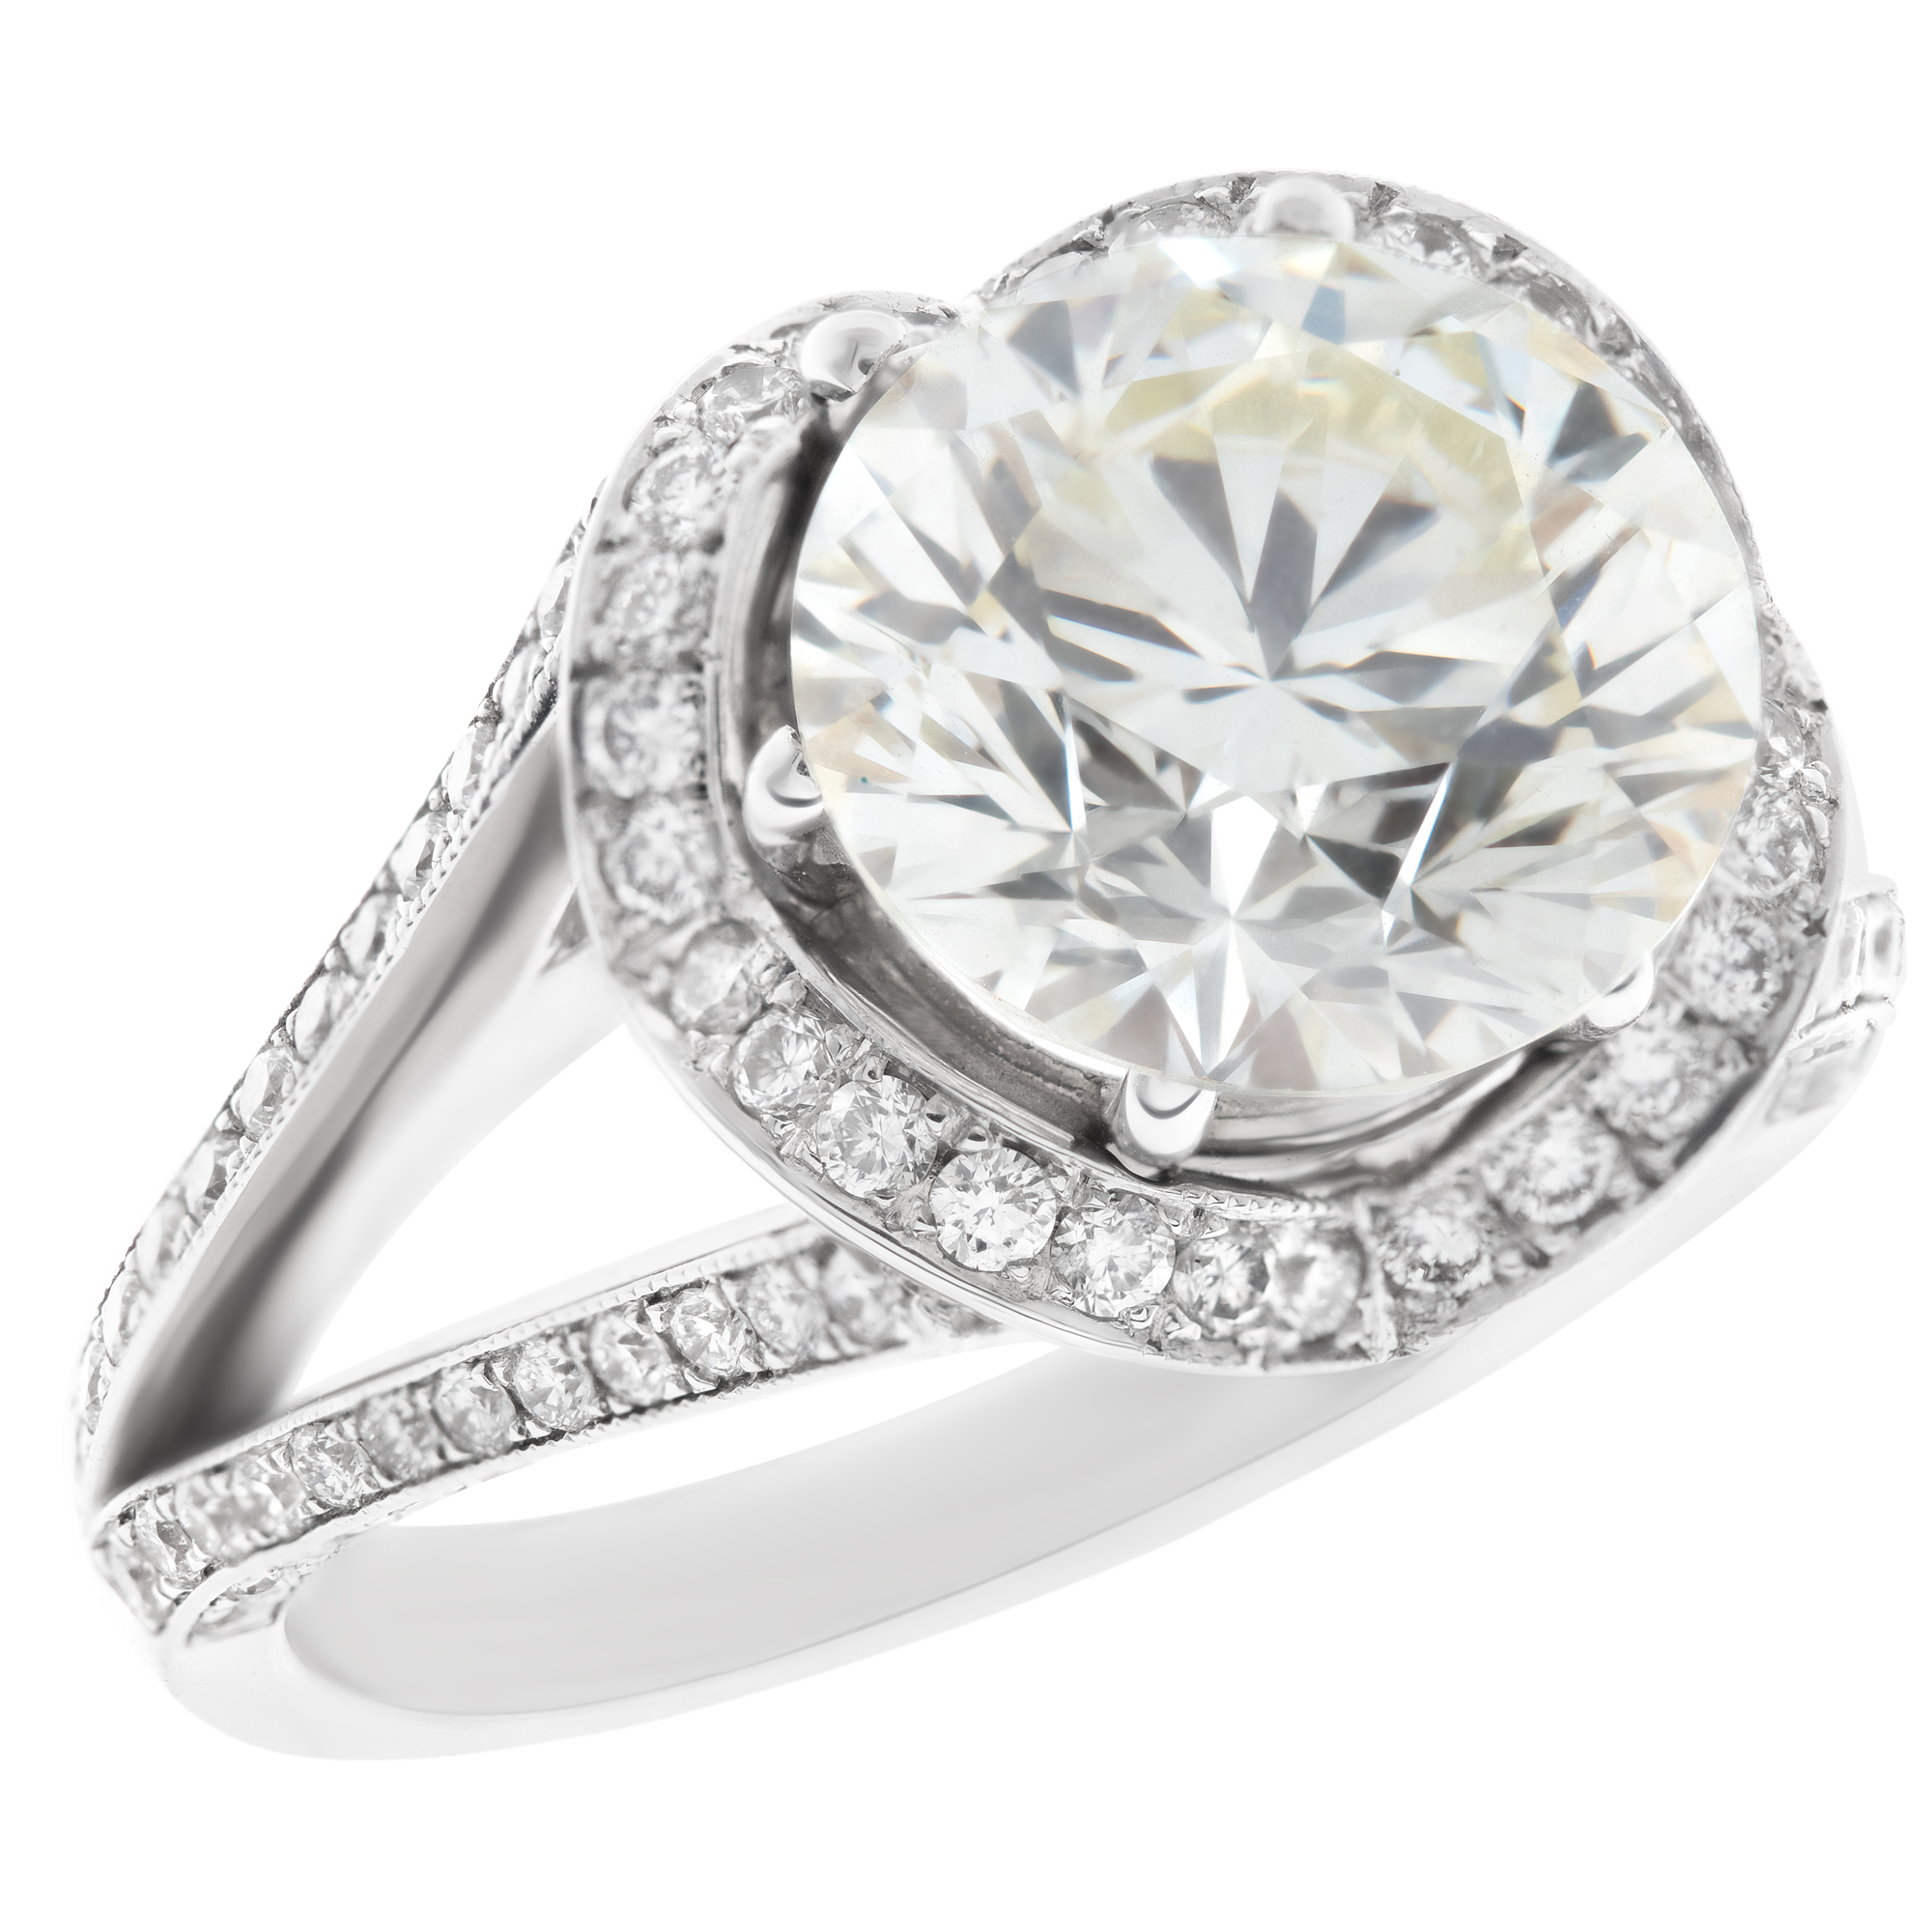 GIA certified round brilliant cut diamond 4.04 carat (M color, VS1 clarity) ring image 2